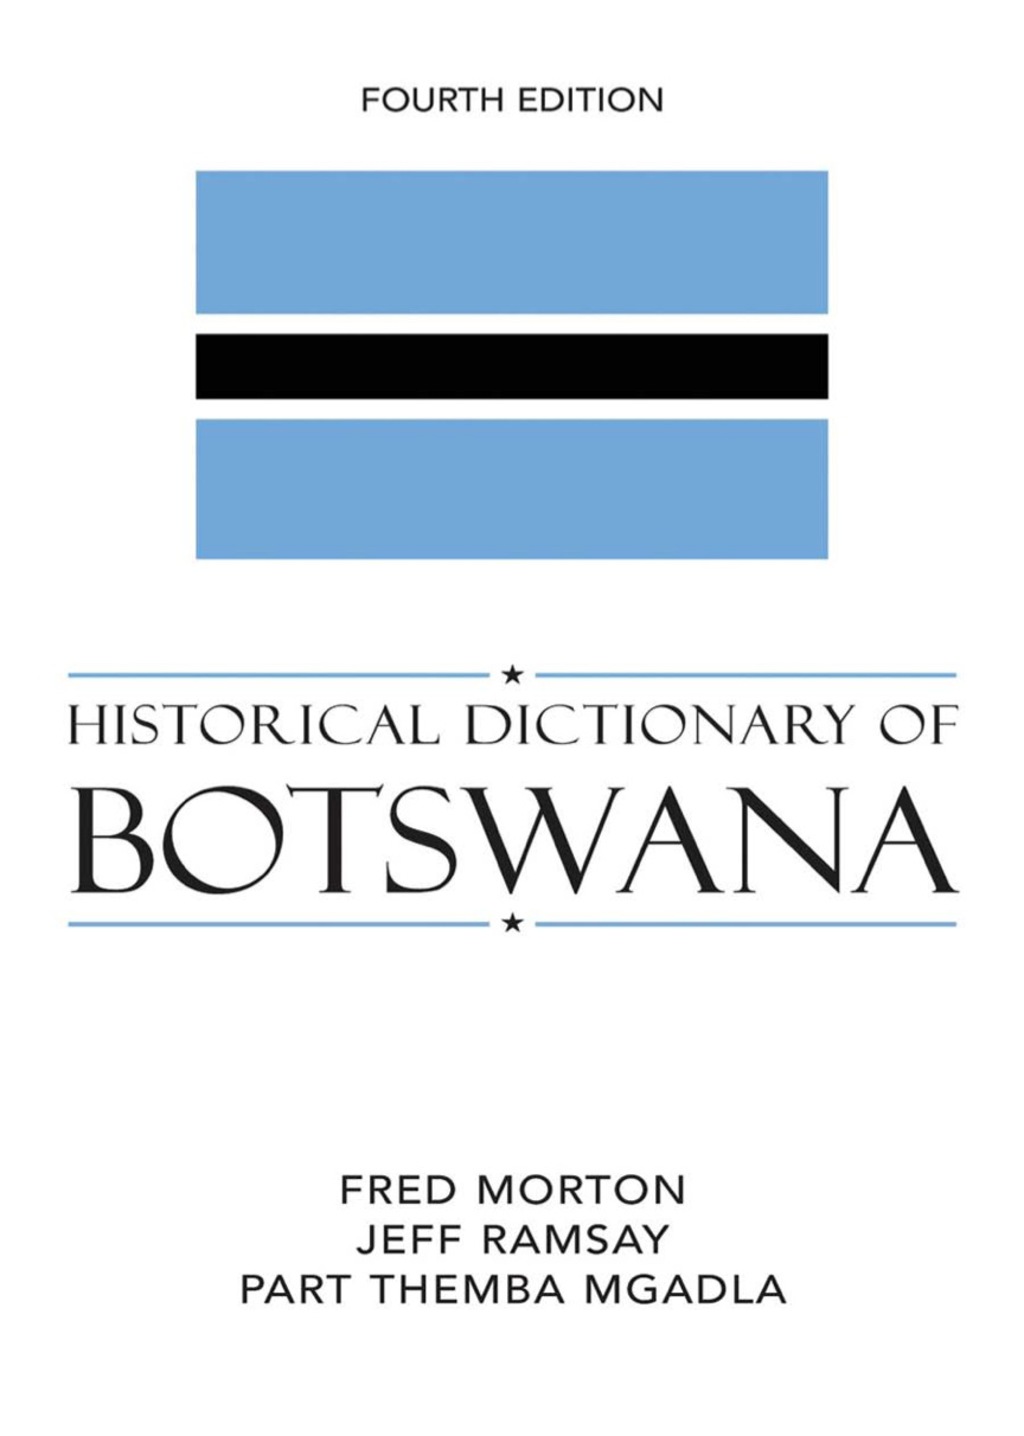 Historical Dictionary of Botswana - 4th Edition (eBook Rental)